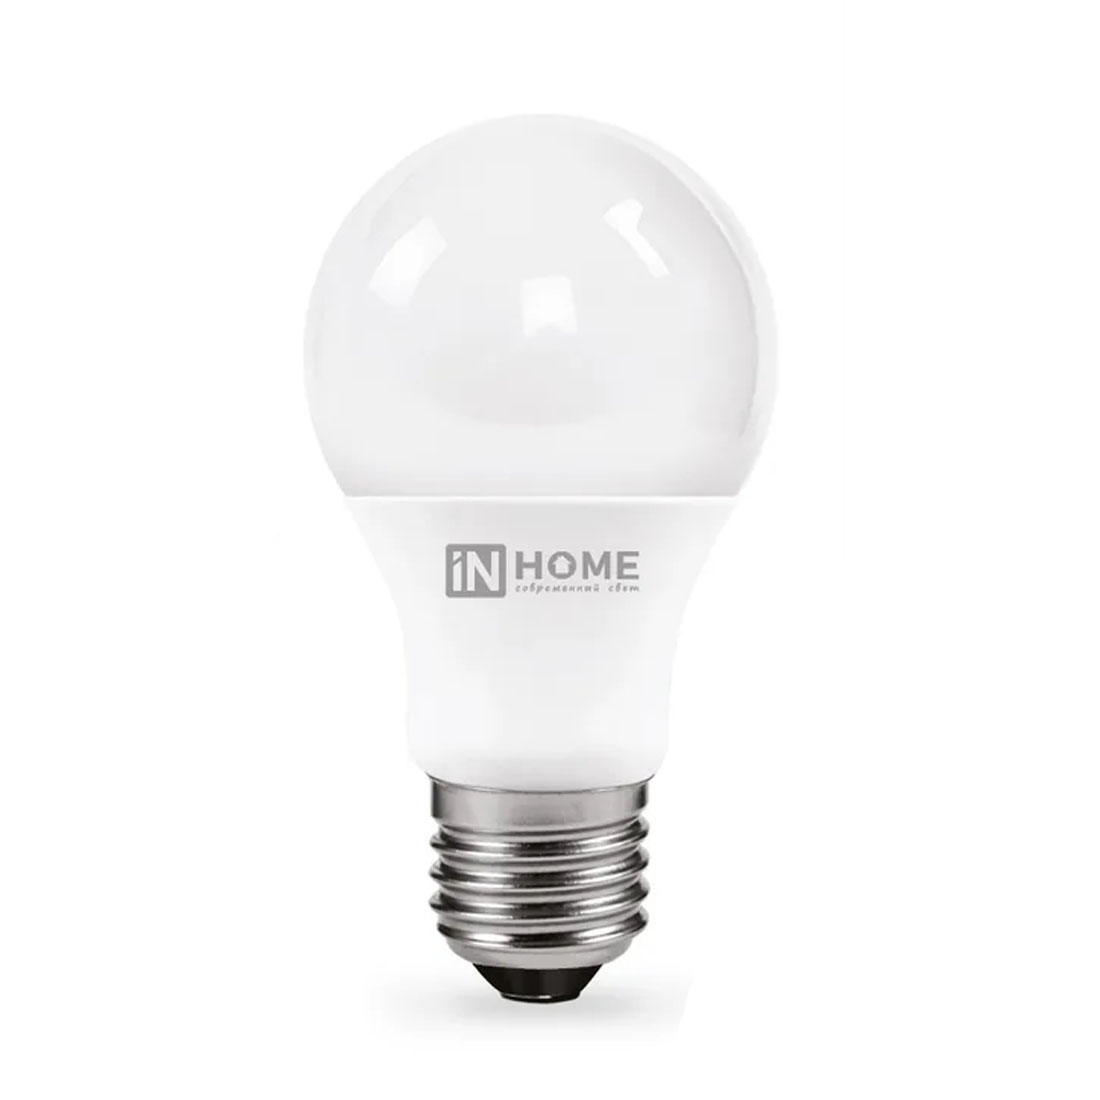 Светодиодная лампа IN HOME LED-A60-VC, 12Вт, 4000K, цоколь E27